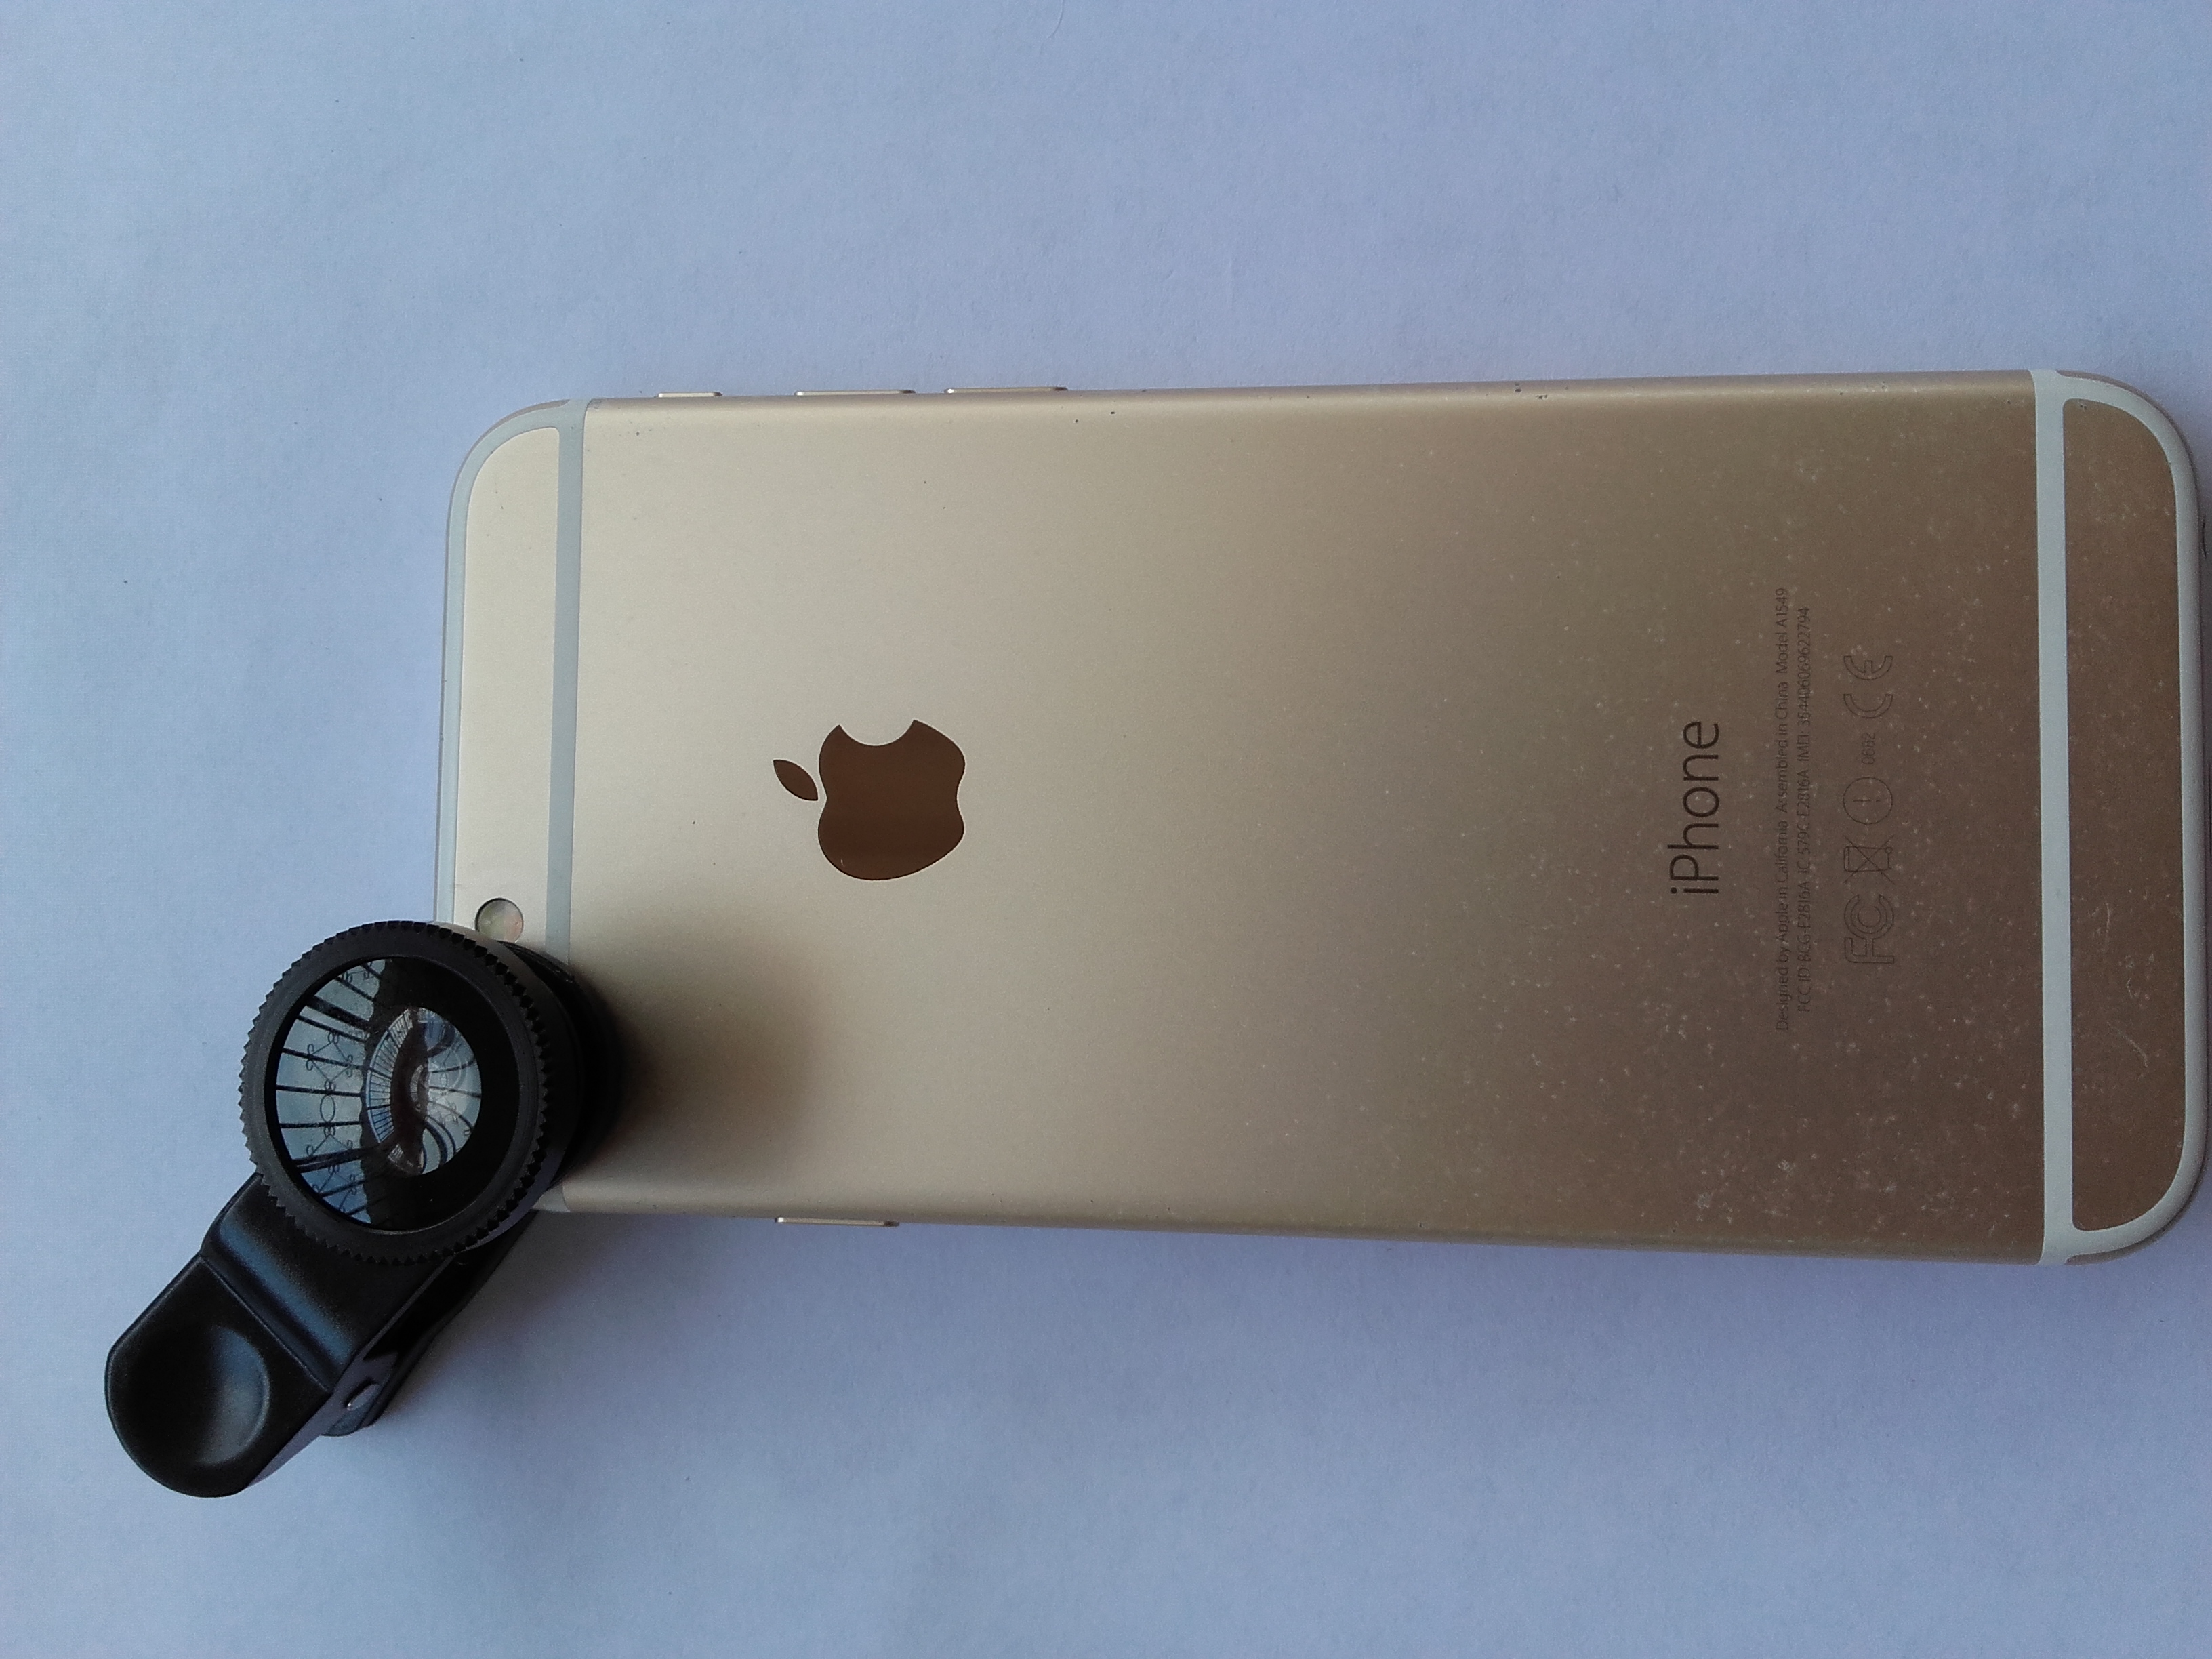 iphone de Apple con adaptador univ clip lents